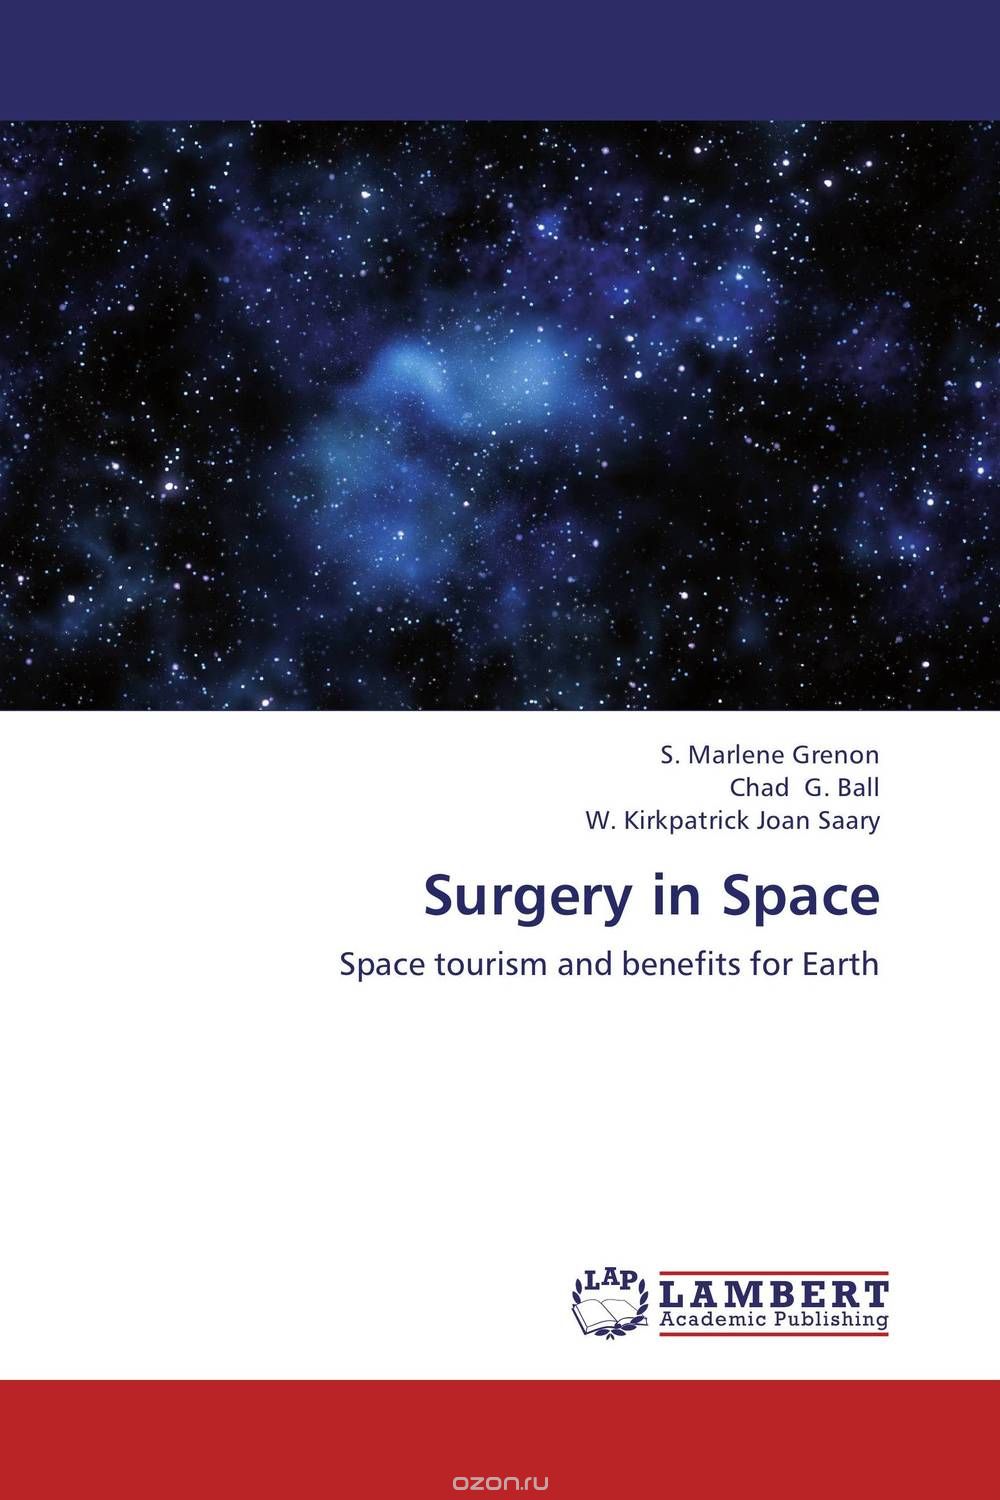 Скачать книгу "Surgery in Space"